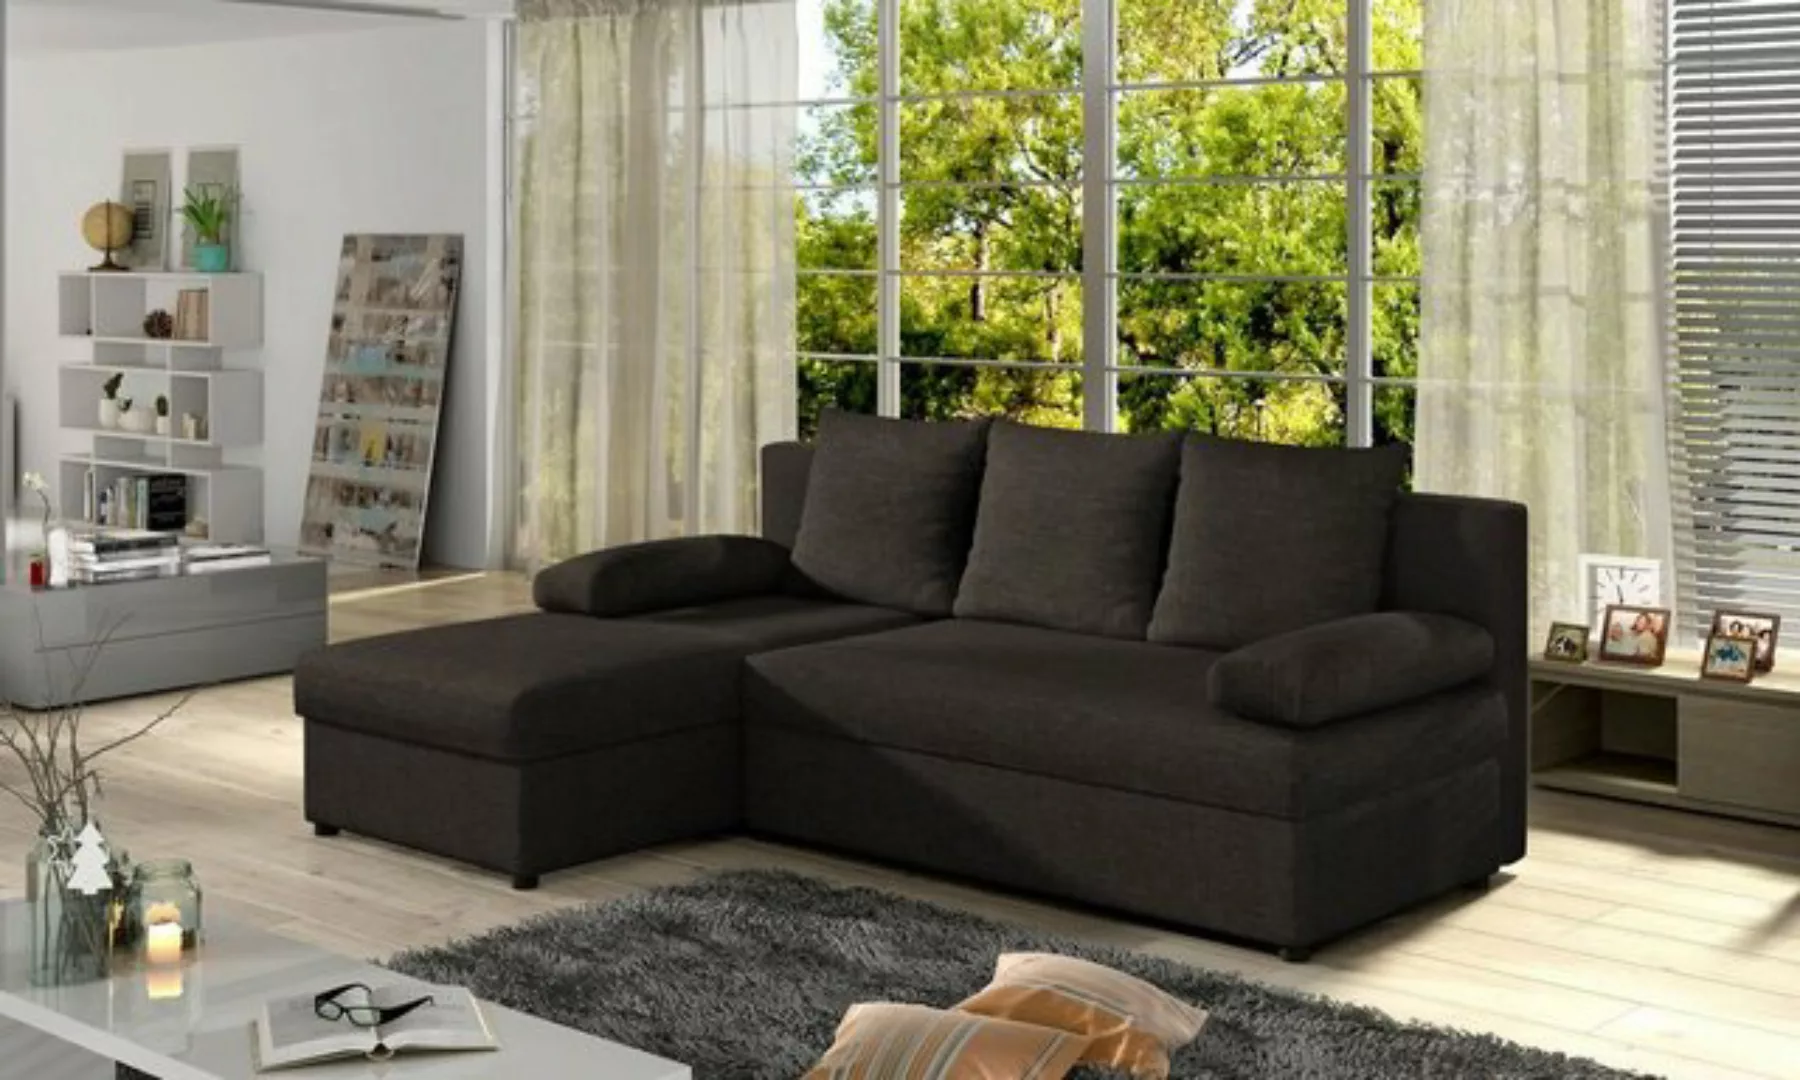 JVmoebel Ecksofa Moderne Schlafsofa Couch Polster Ecksofa Garnitur Bettfunk günstig online kaufen